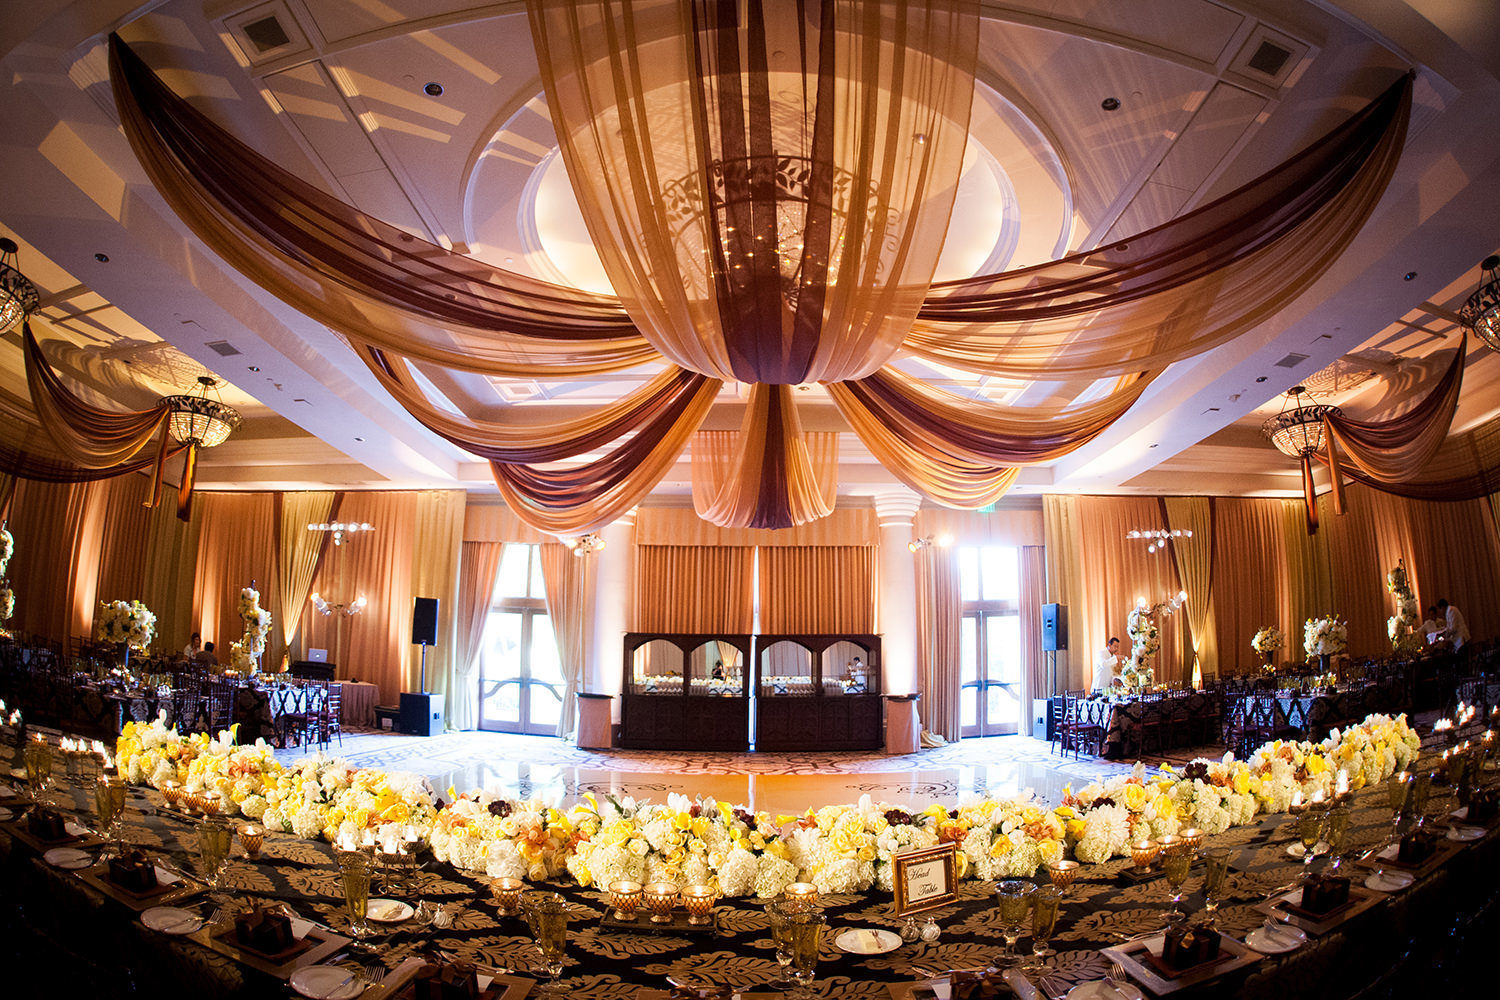 Elaborate and elegant wedding reception room design